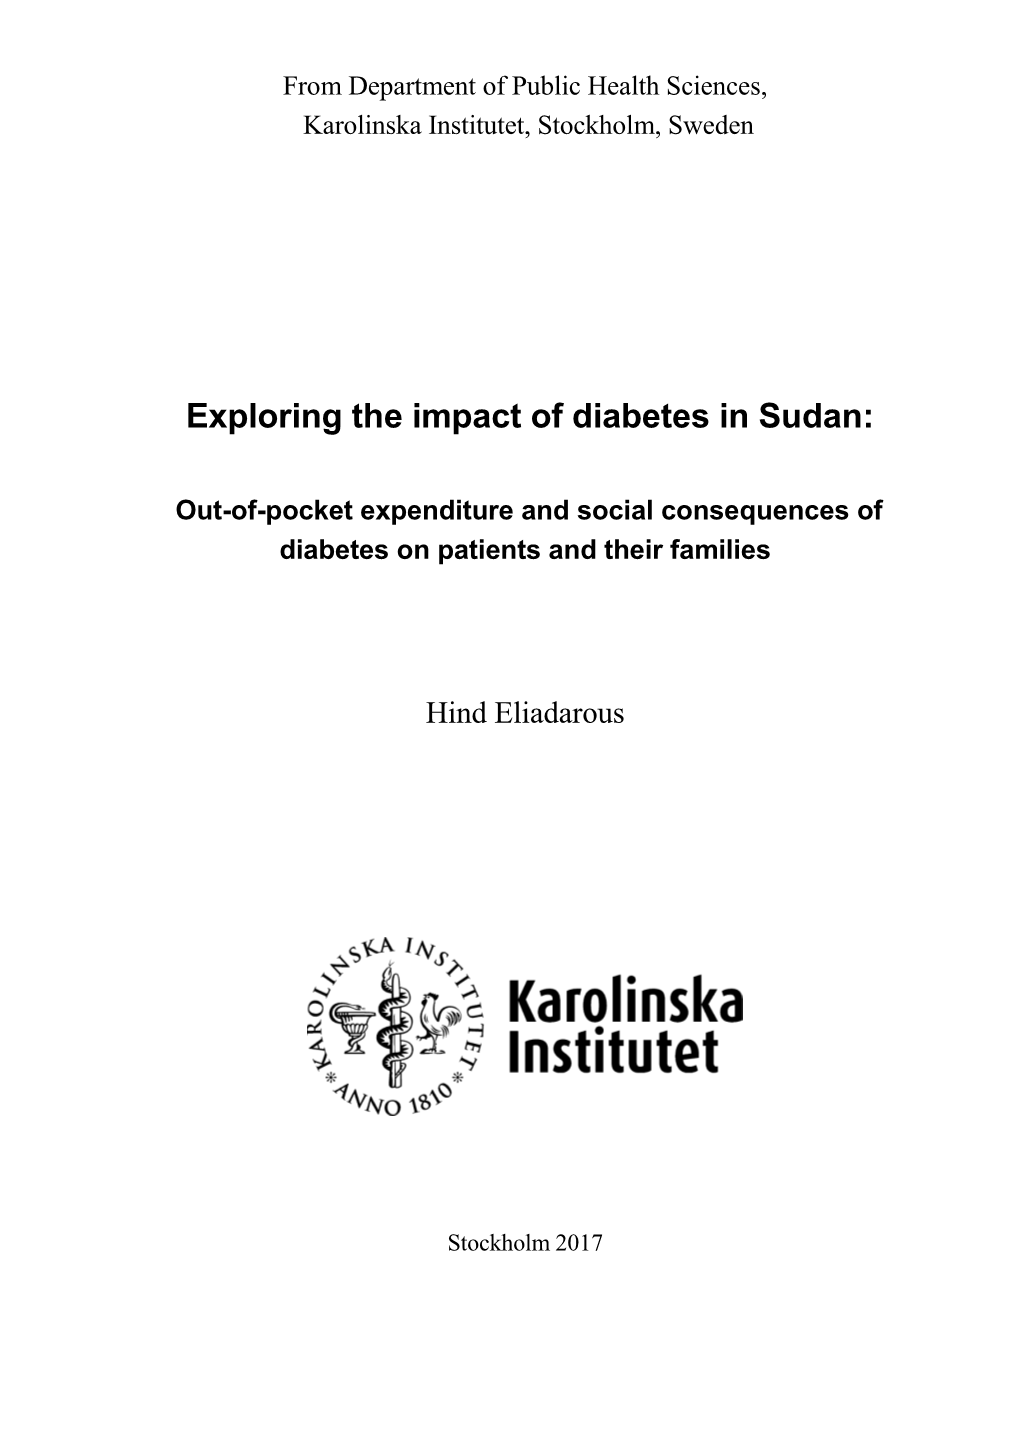 Exploring the Impact of Diabetes in Sudan